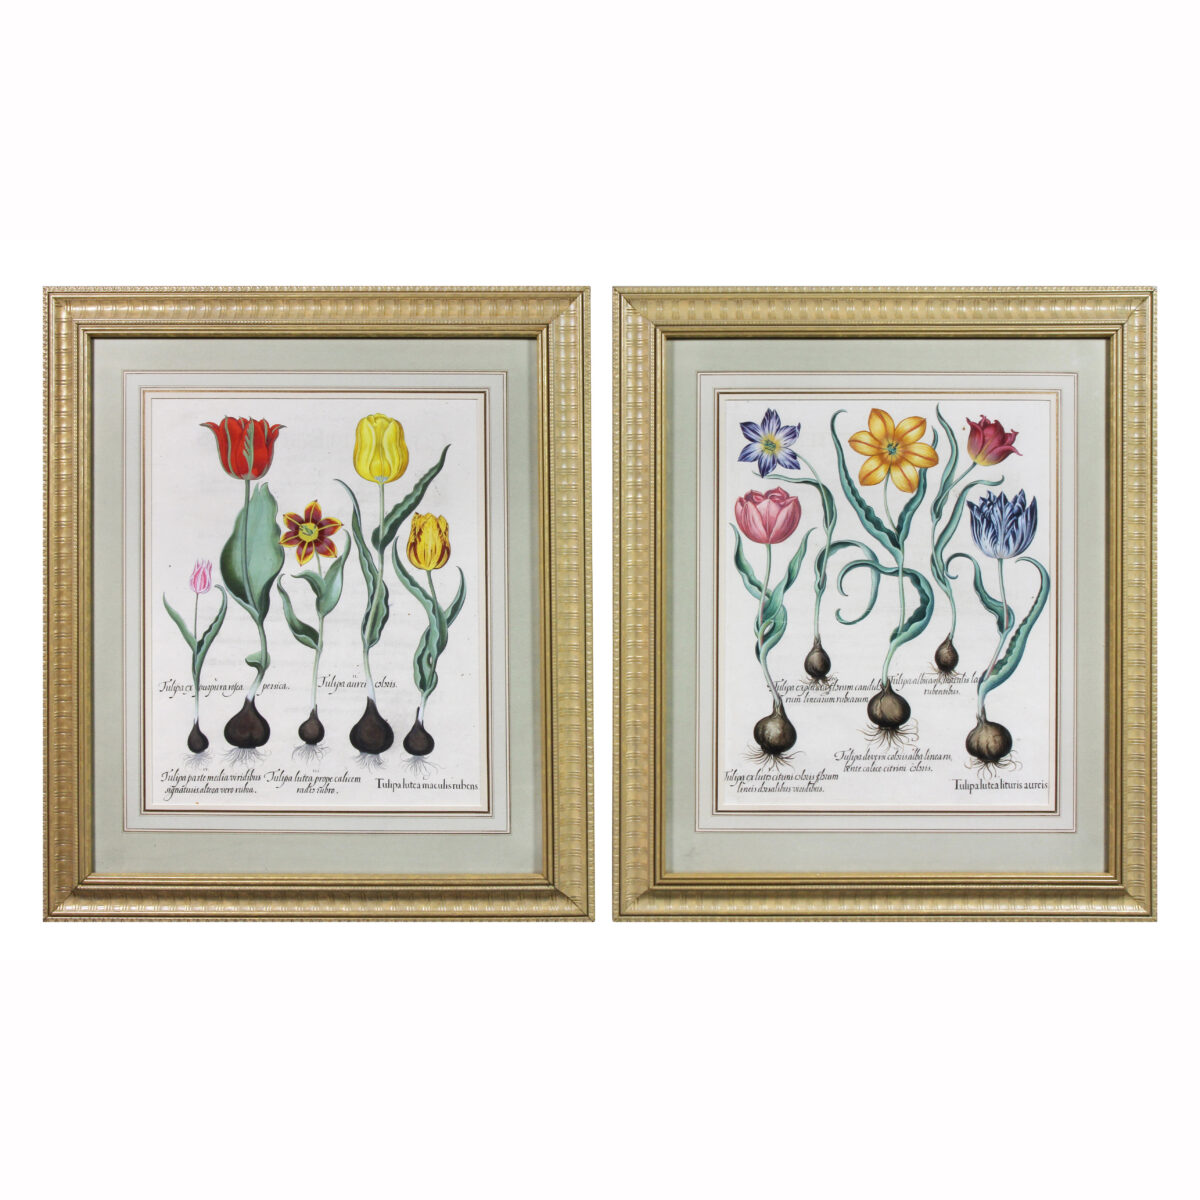 Pair of Framed Hand Colored Engravings of Tulips by Basilius Besler